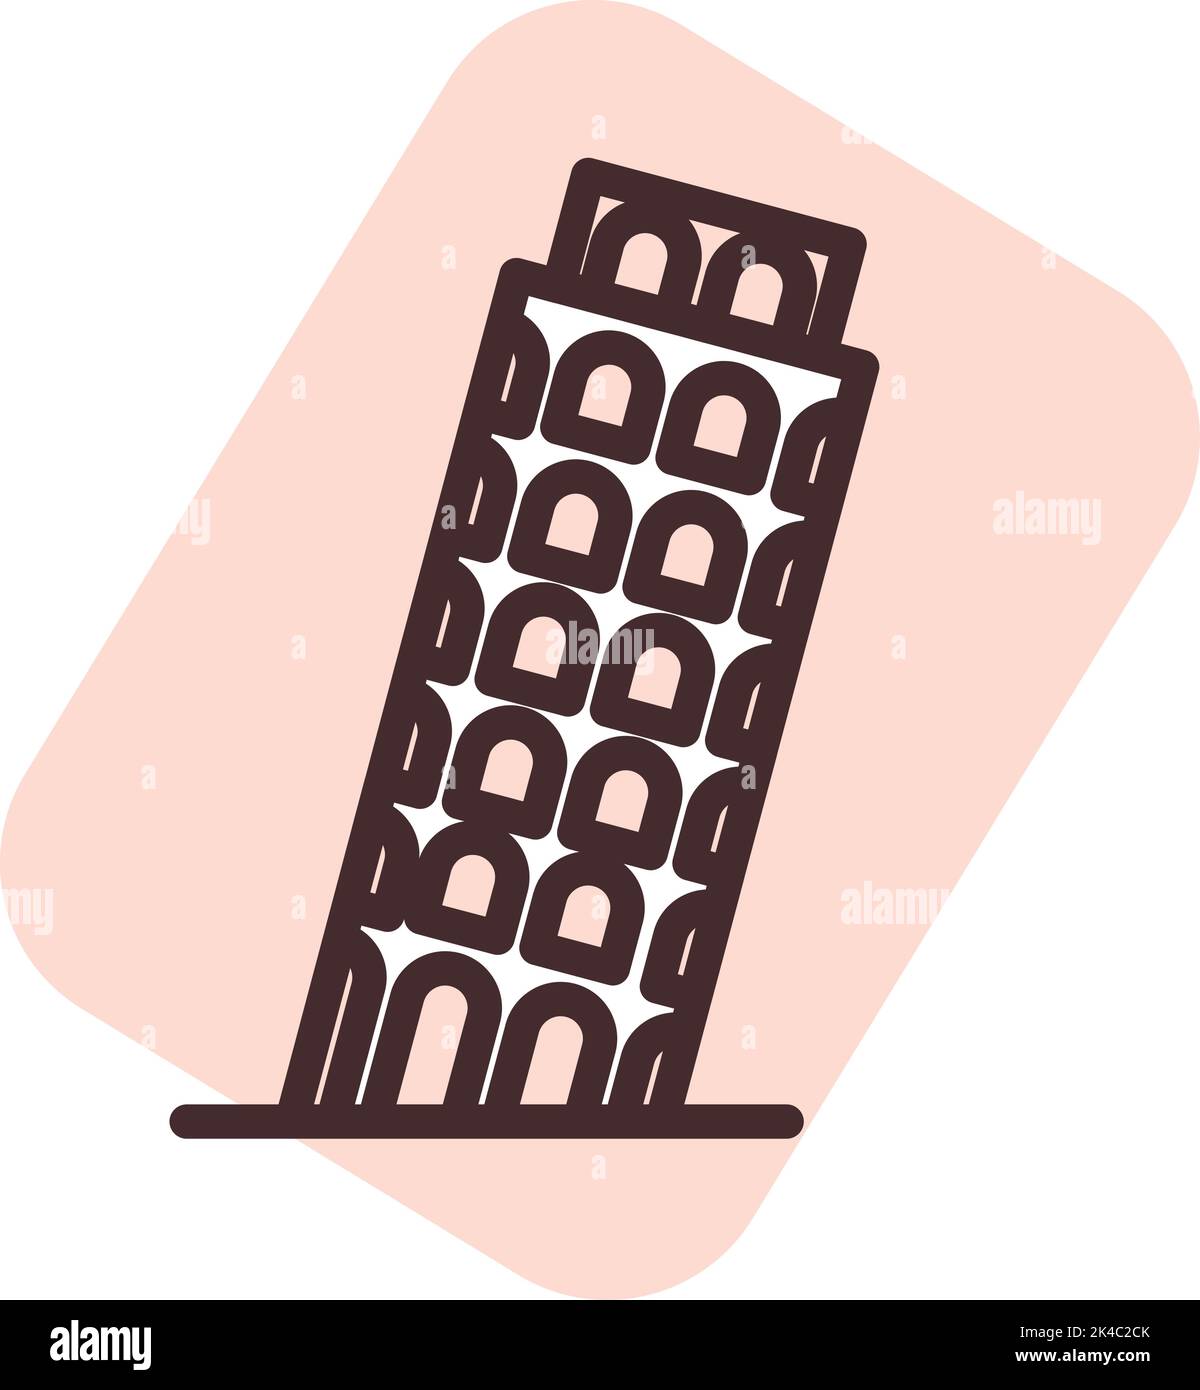 Tower of Pisa, illustration, vector on white background. Stock Vector